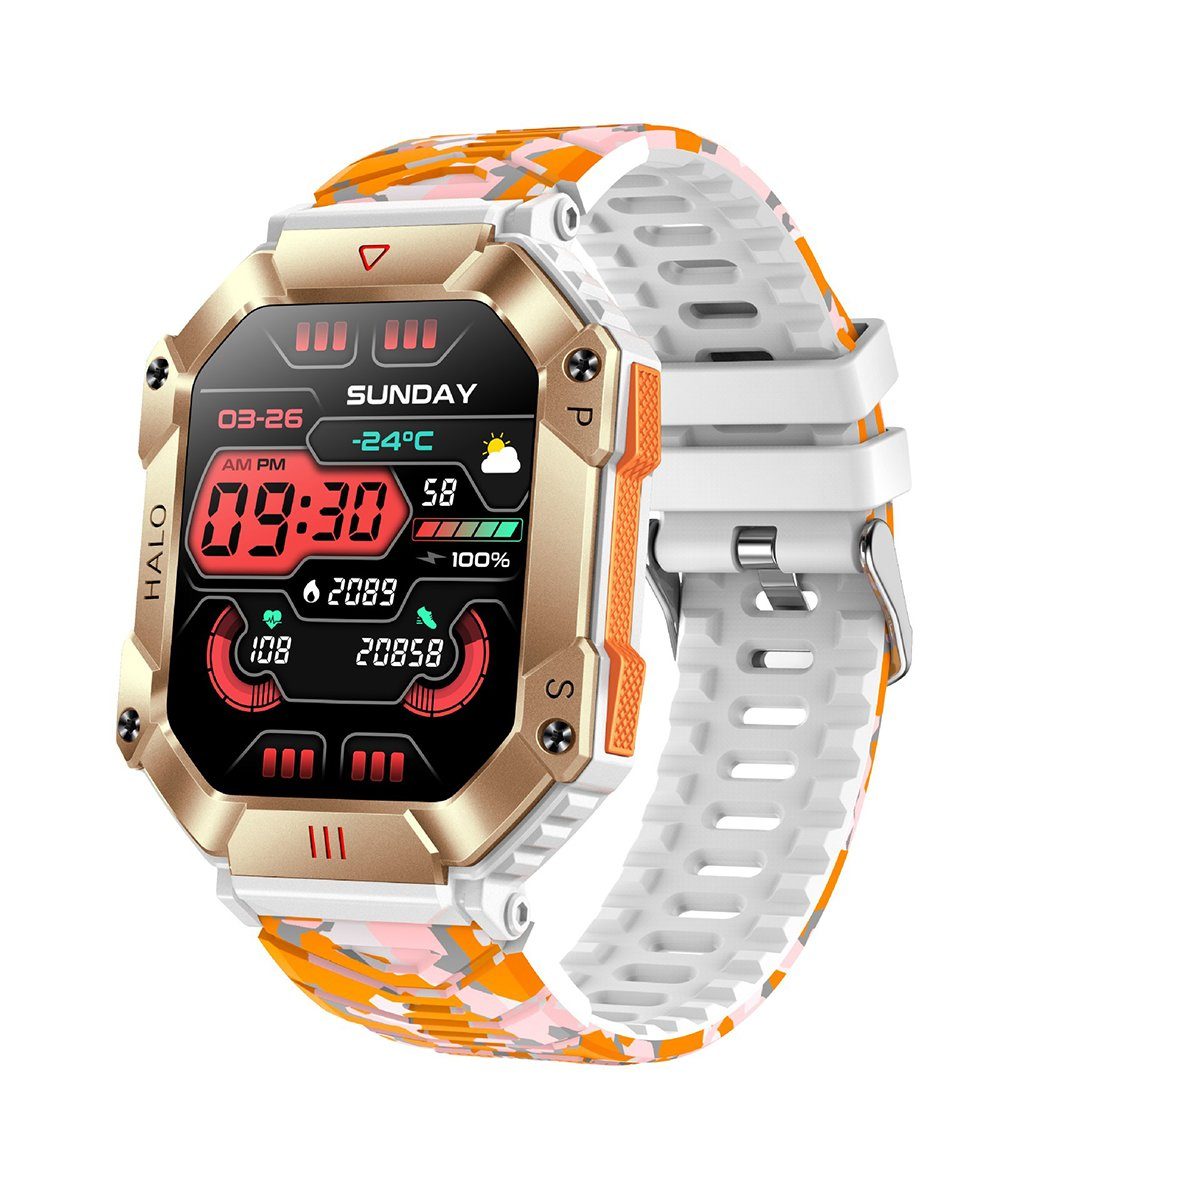 Welikera, 2,0-Zoll 650mAh Kompass Herzfrequenzmessung Outdoor-Uhr Smartwatch